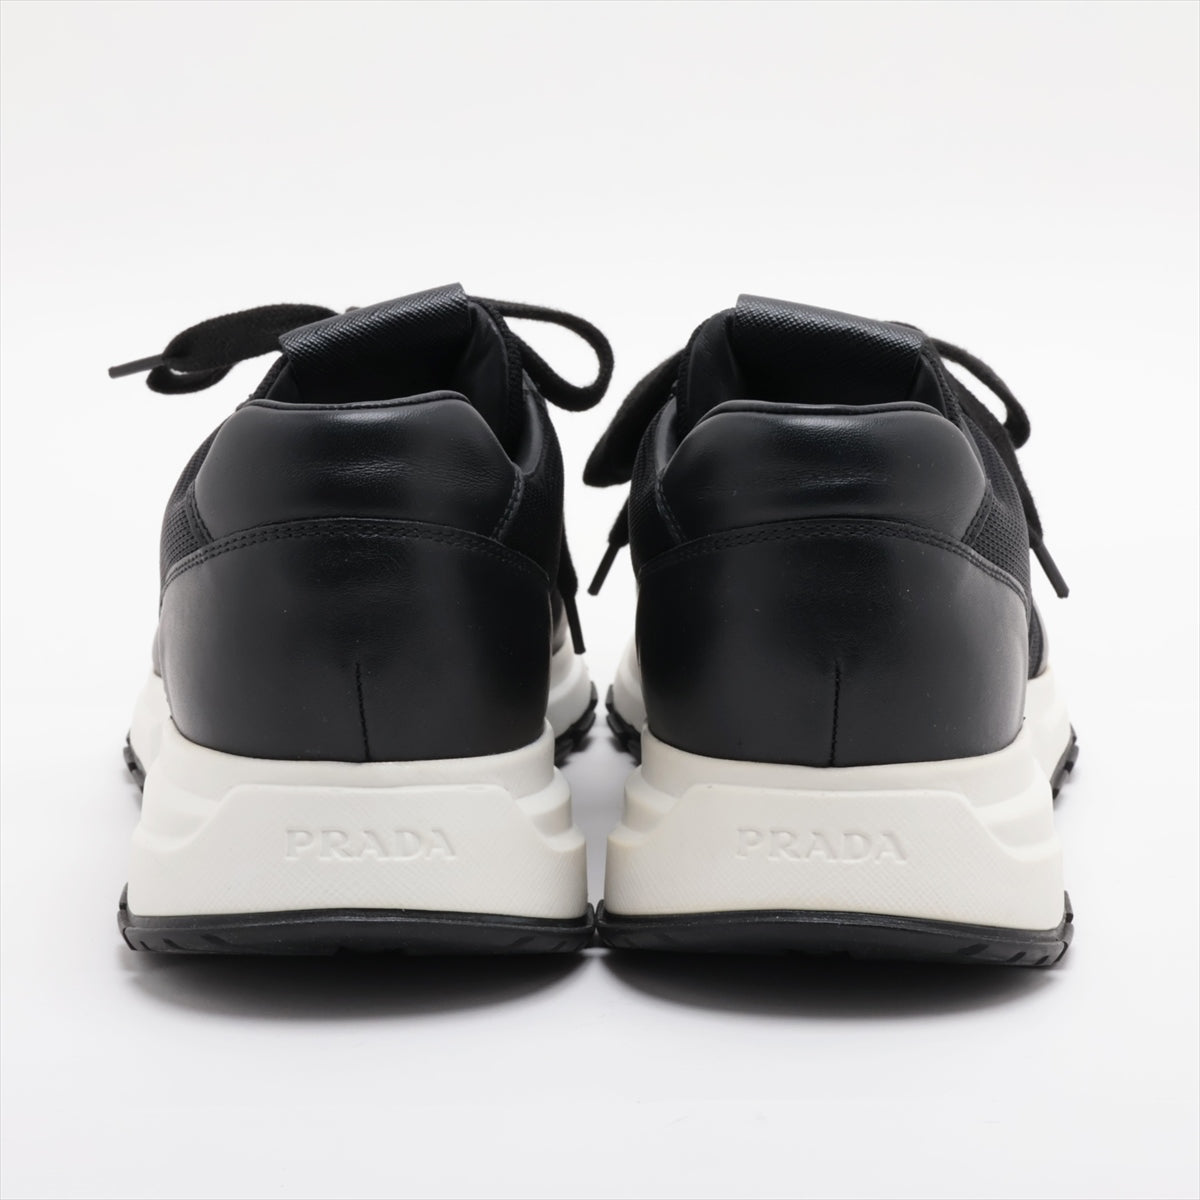 Prada Leather x mesh Sneakers US9 Men's Black 4E3571